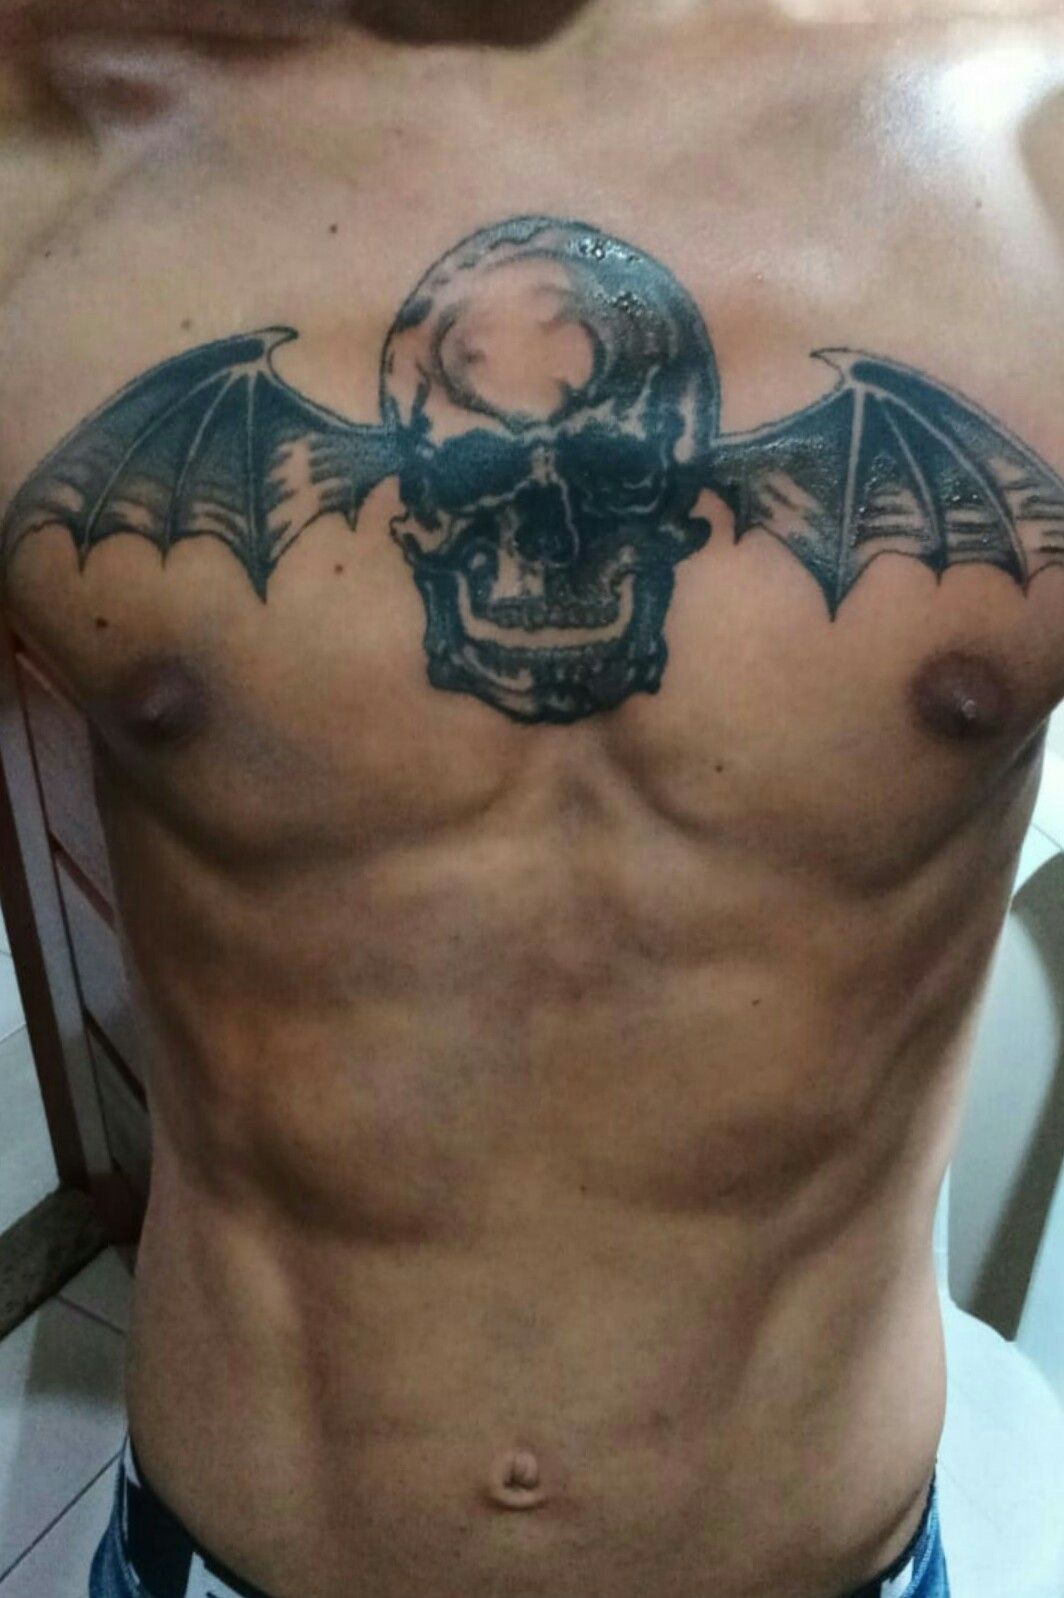 Avenged Sevenfold logo by  Rabbit Ink  Tattoo Studio  Facebook